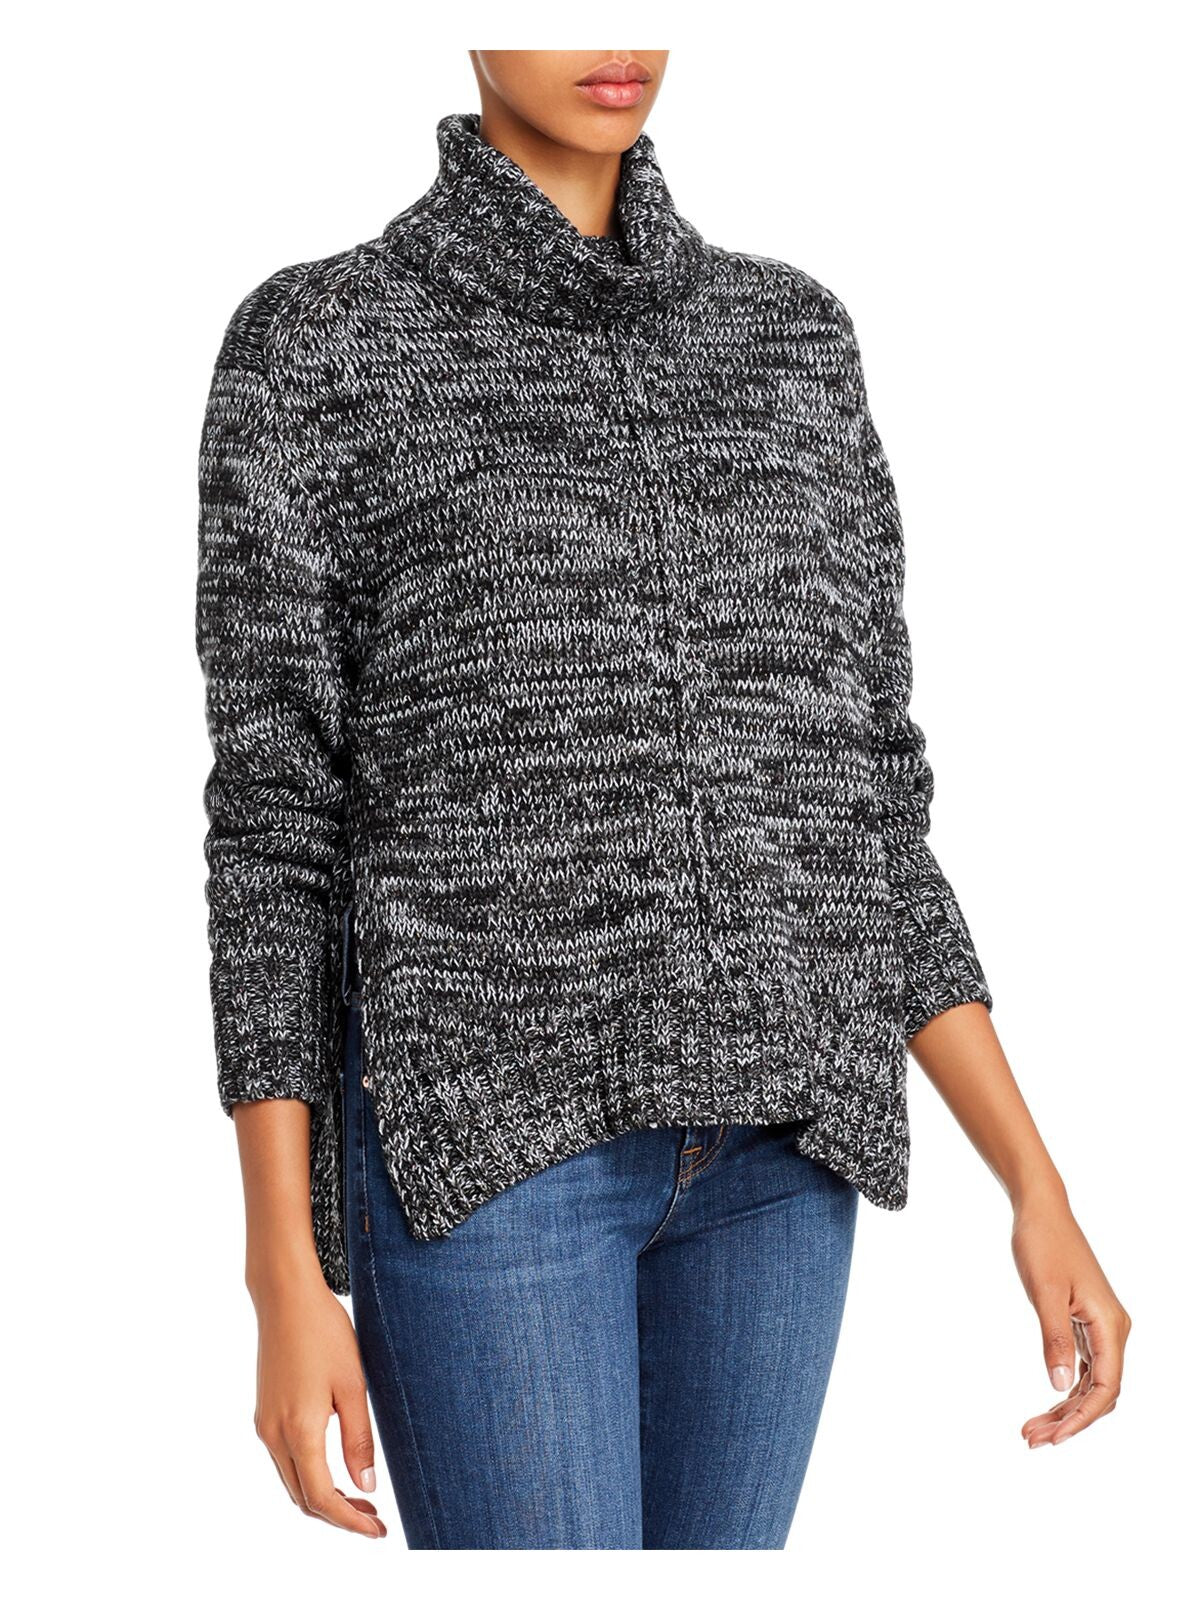 AQUA Womens Black Embellished Ribbed Knitted Long Sleeve Turtle Neck Sweater XS